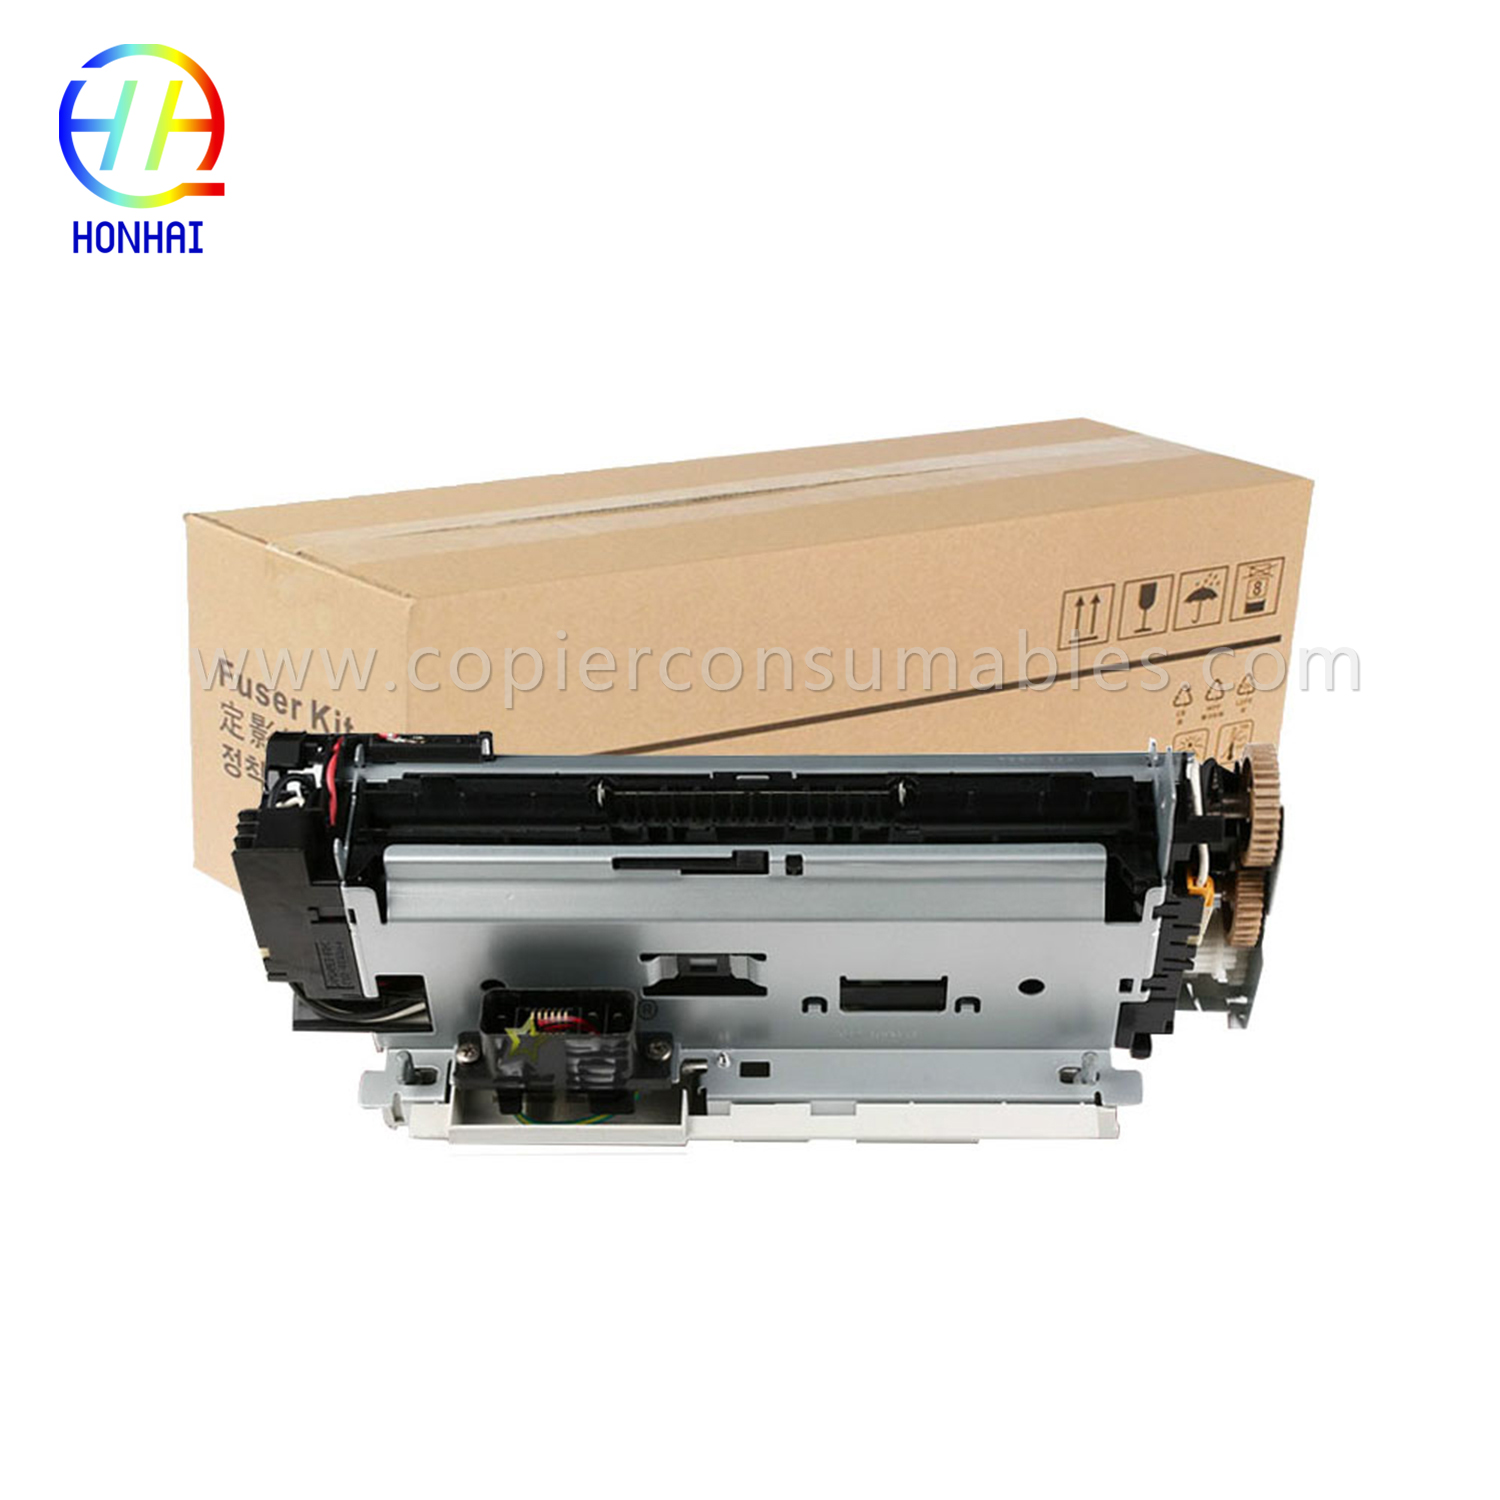 Fuser Unit for HP LaserJet 4100 4101mfp (RG5-5063-000 RG5-5063-340 C8049-69013)  (1)